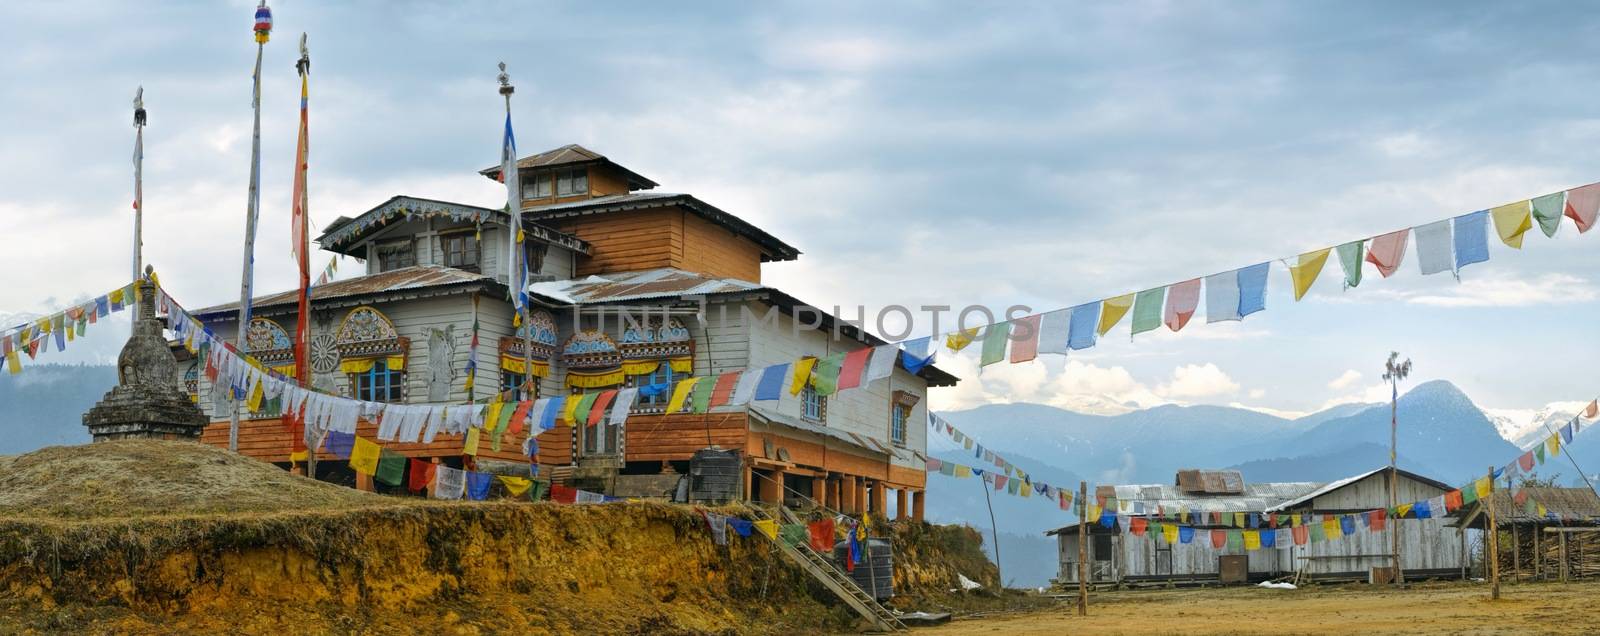 Temple in Arunachal Pradesh by MichalKnitl